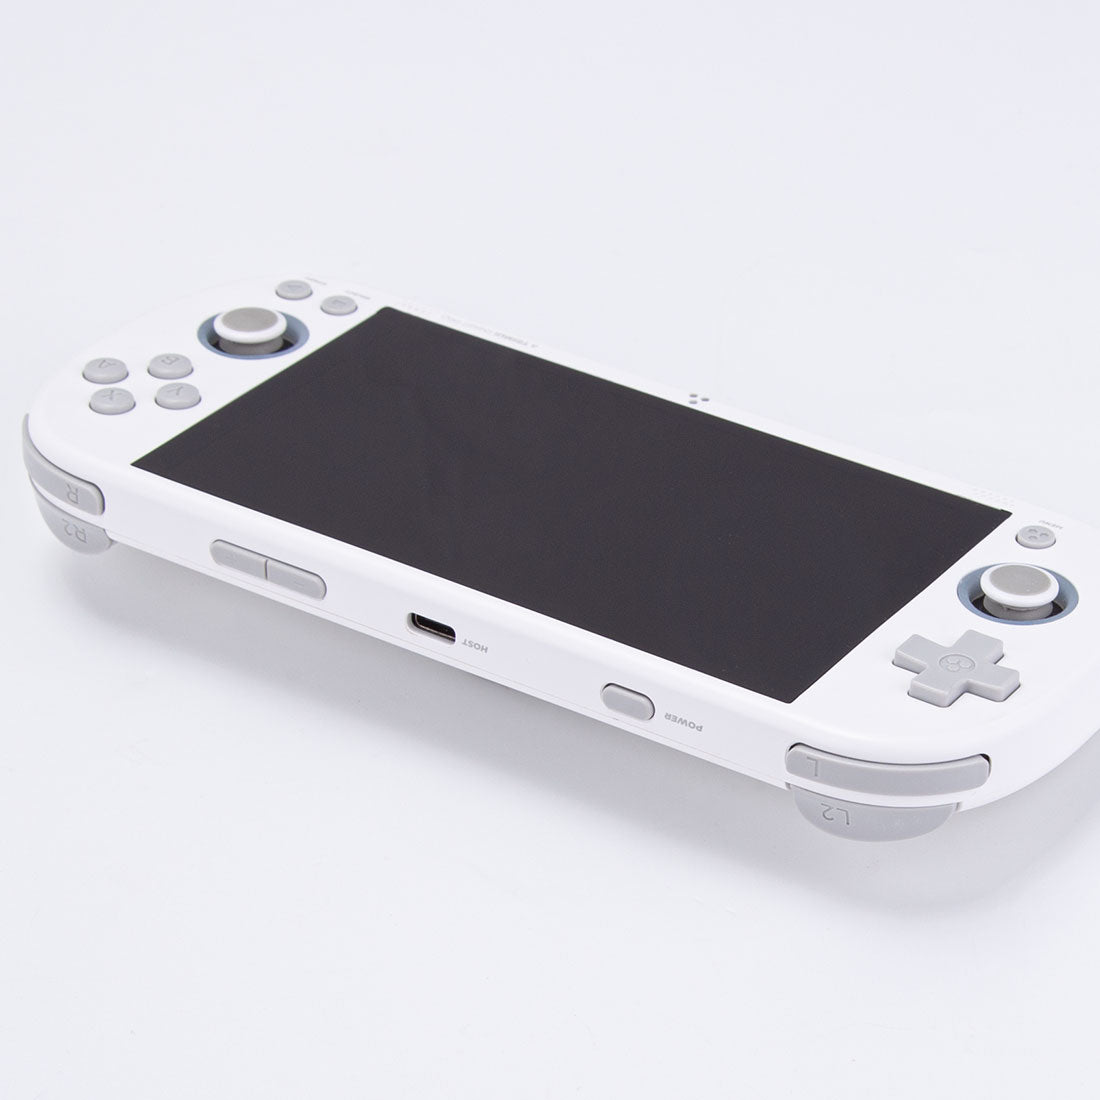 trimui-smart-pro-retro-handheld-game-console white (5).jpg__PID:44a2f447-ea55-41fc-9021-45183aad7220